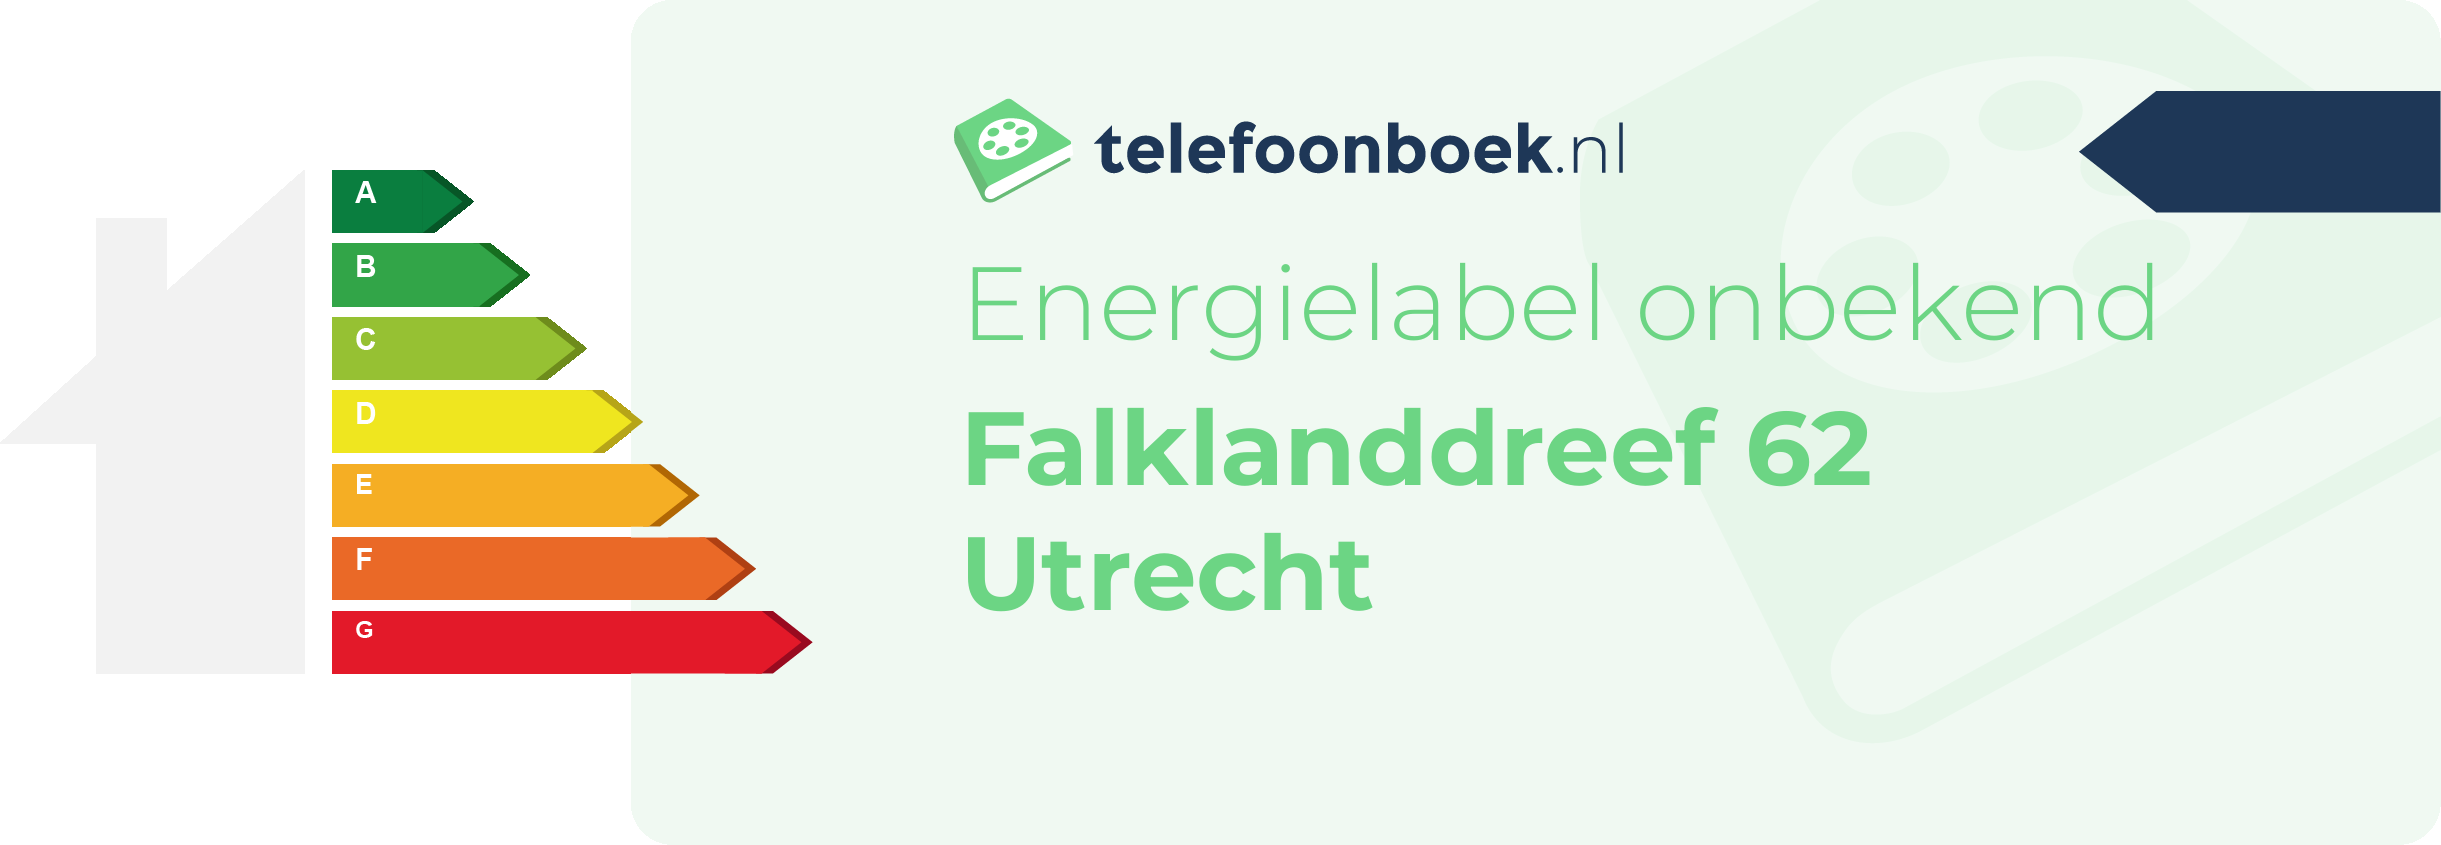 Energielabel Falklanddreef 62 Utrecht